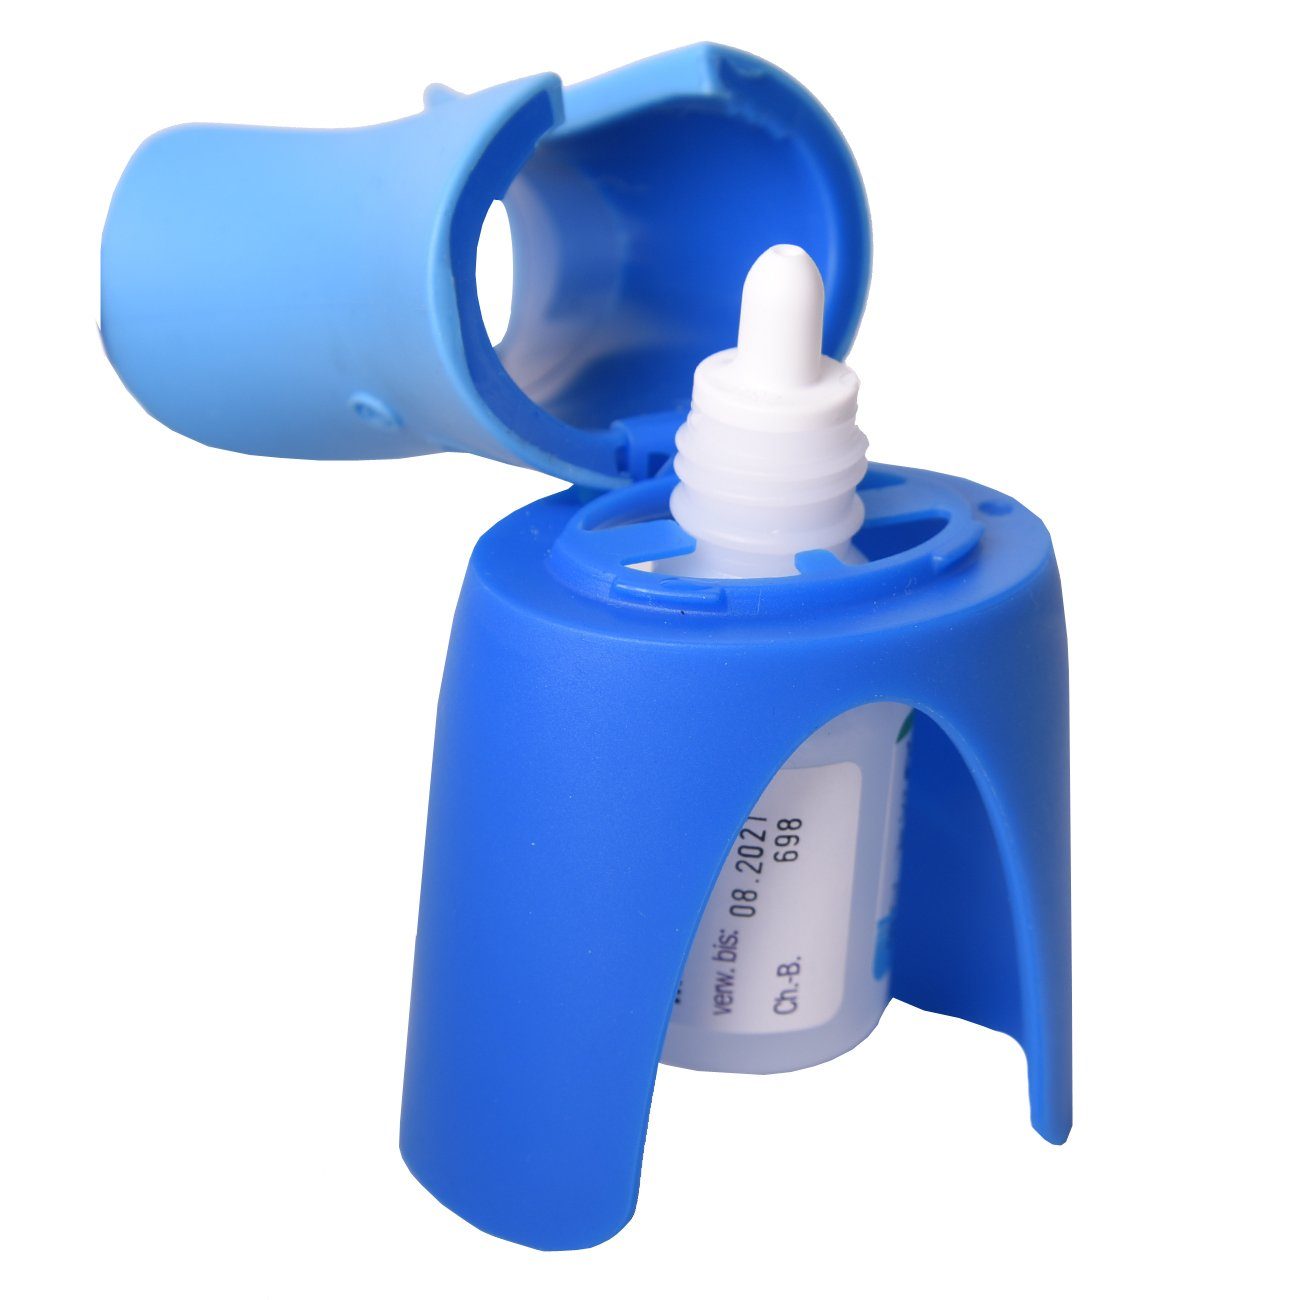 Blau Augenpflege-Set Remedic Premium Augentropfen-Hilfe Applikationshelfer